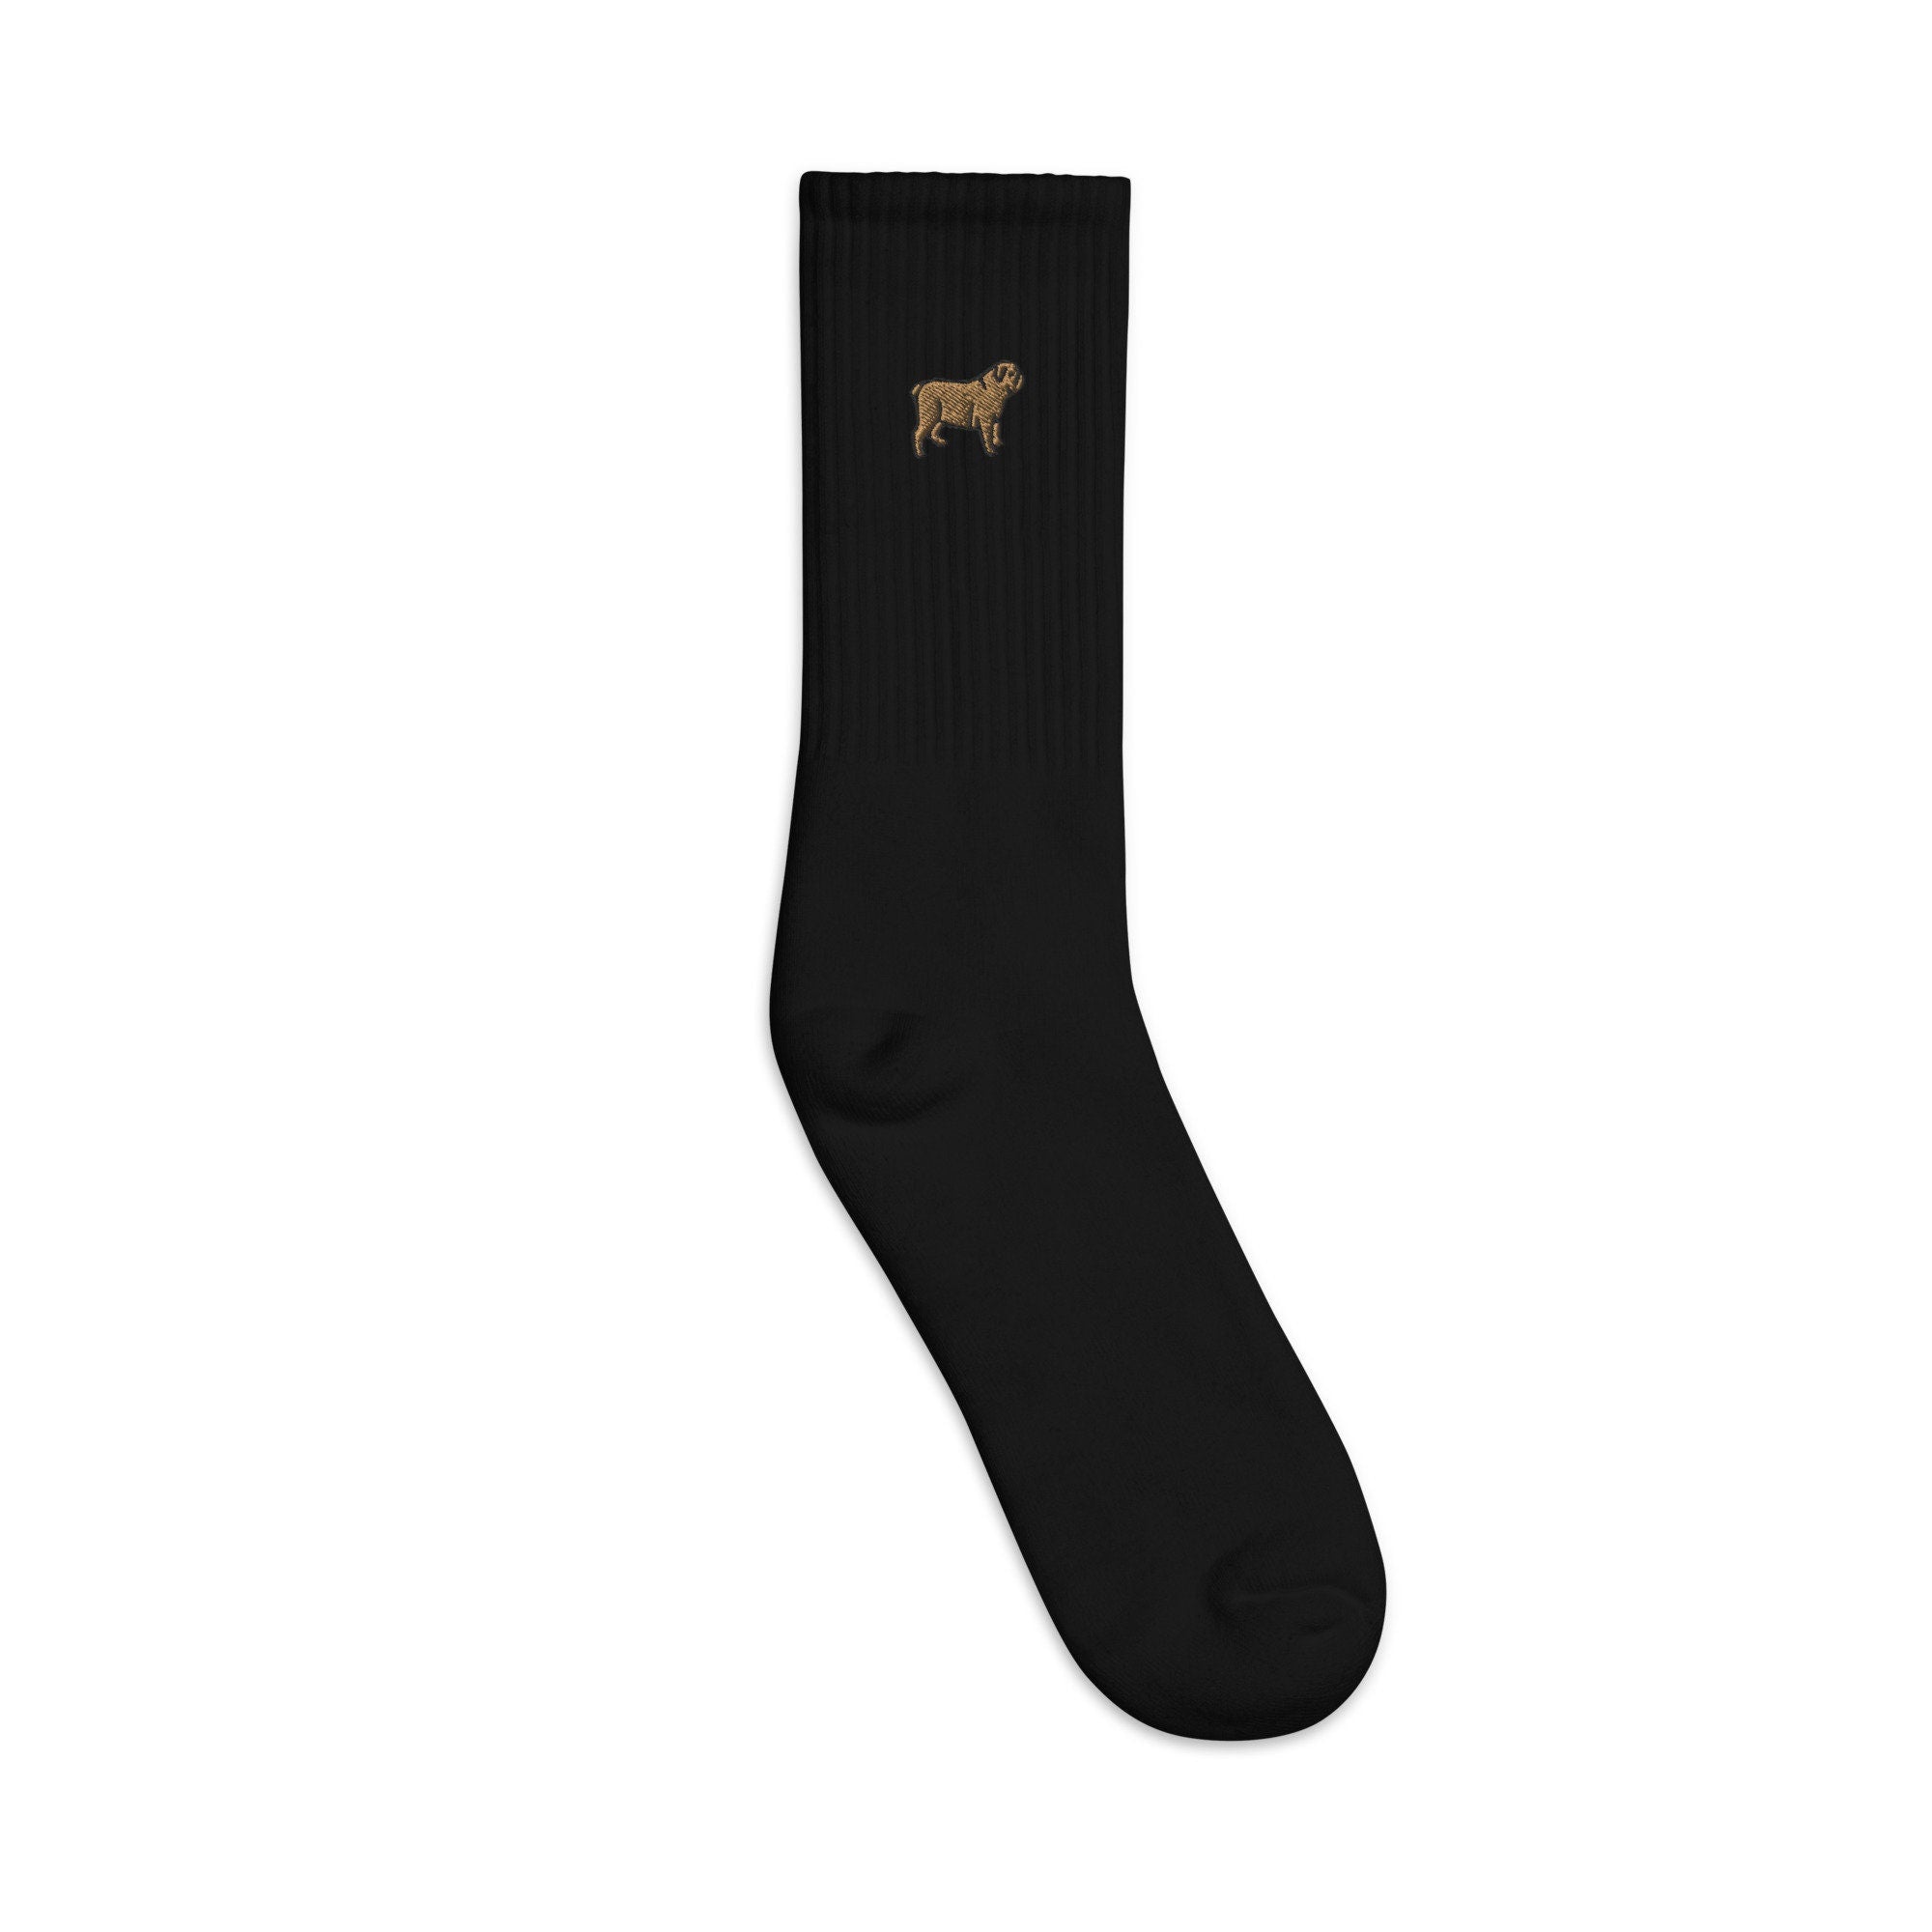 Pug Embroidered Socks, Premium Embroidered Socks, Long Socks Gift - Multiple Colors